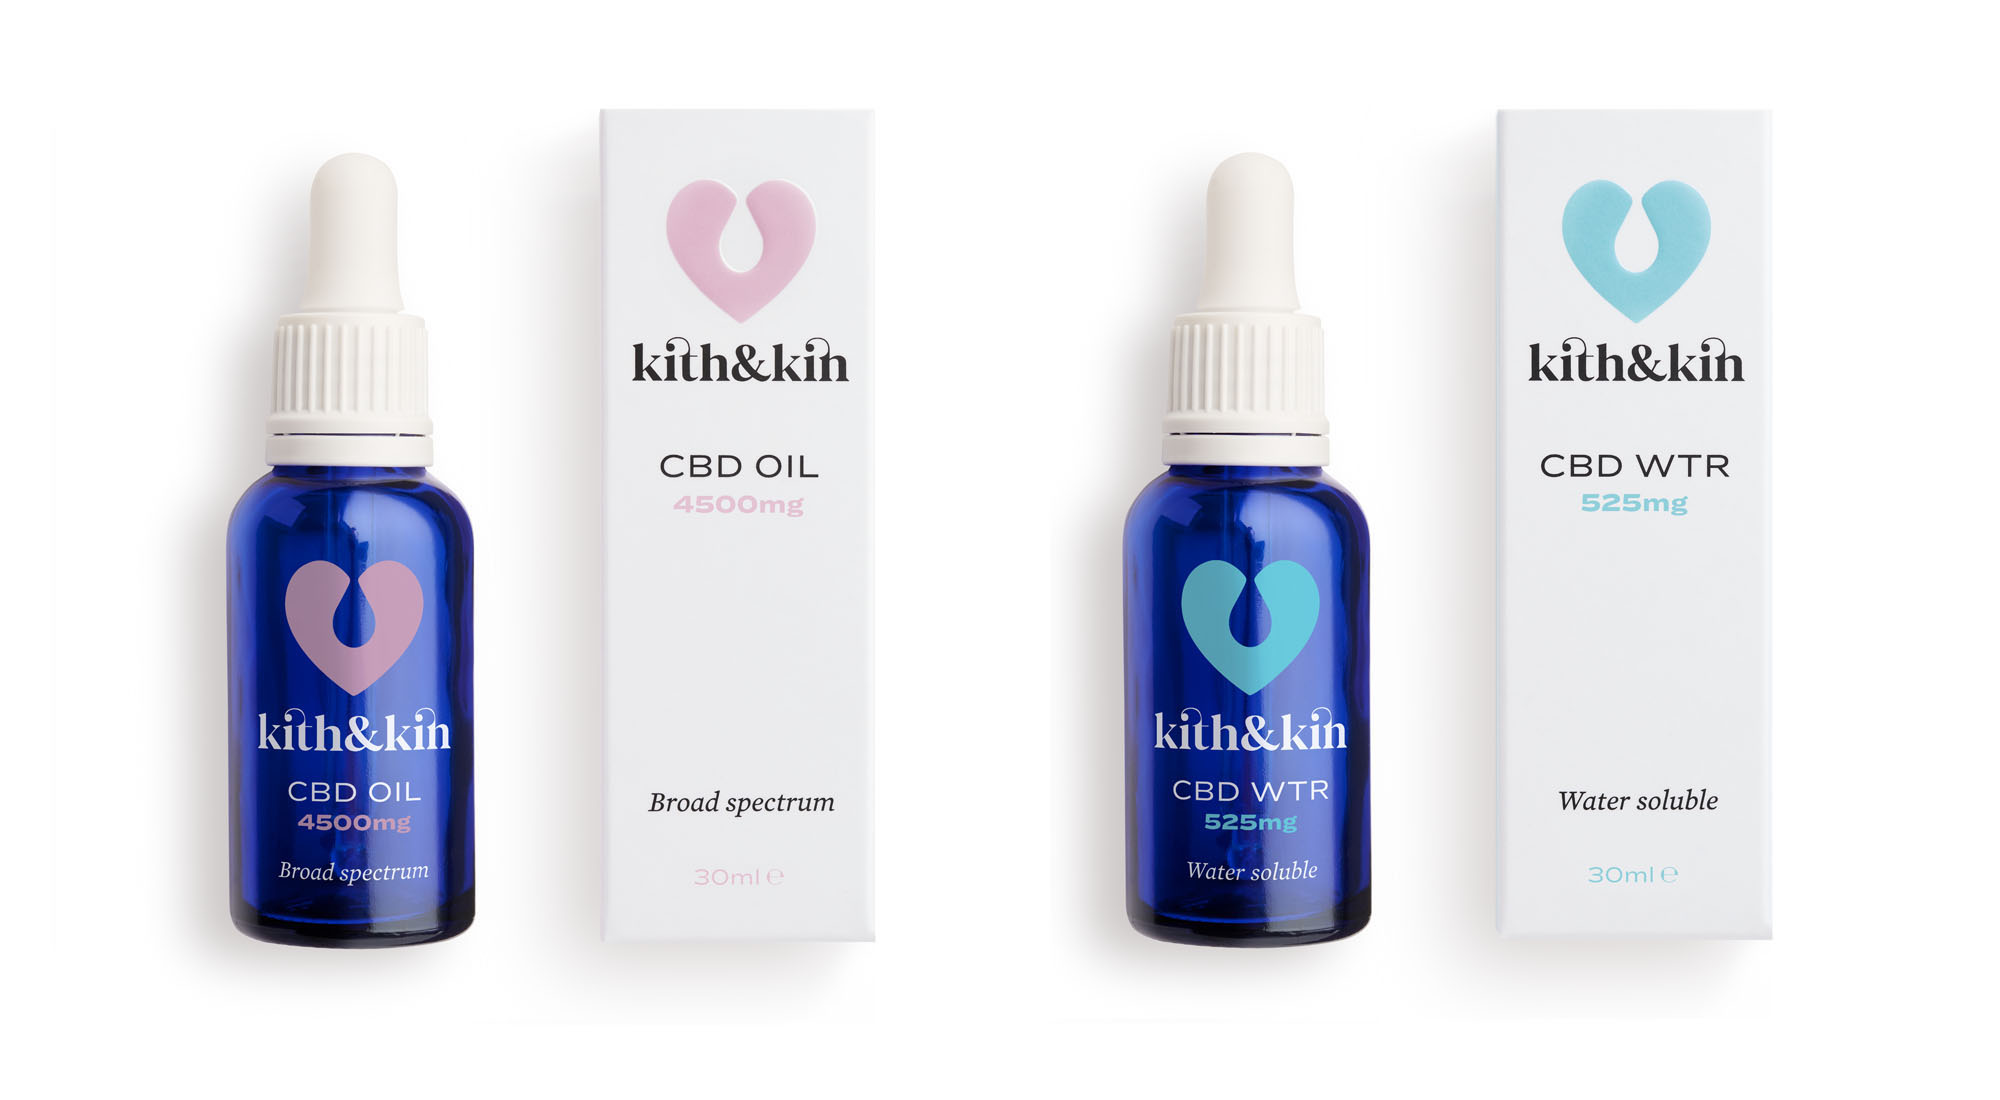 Kith & Kin CBD oil packaging